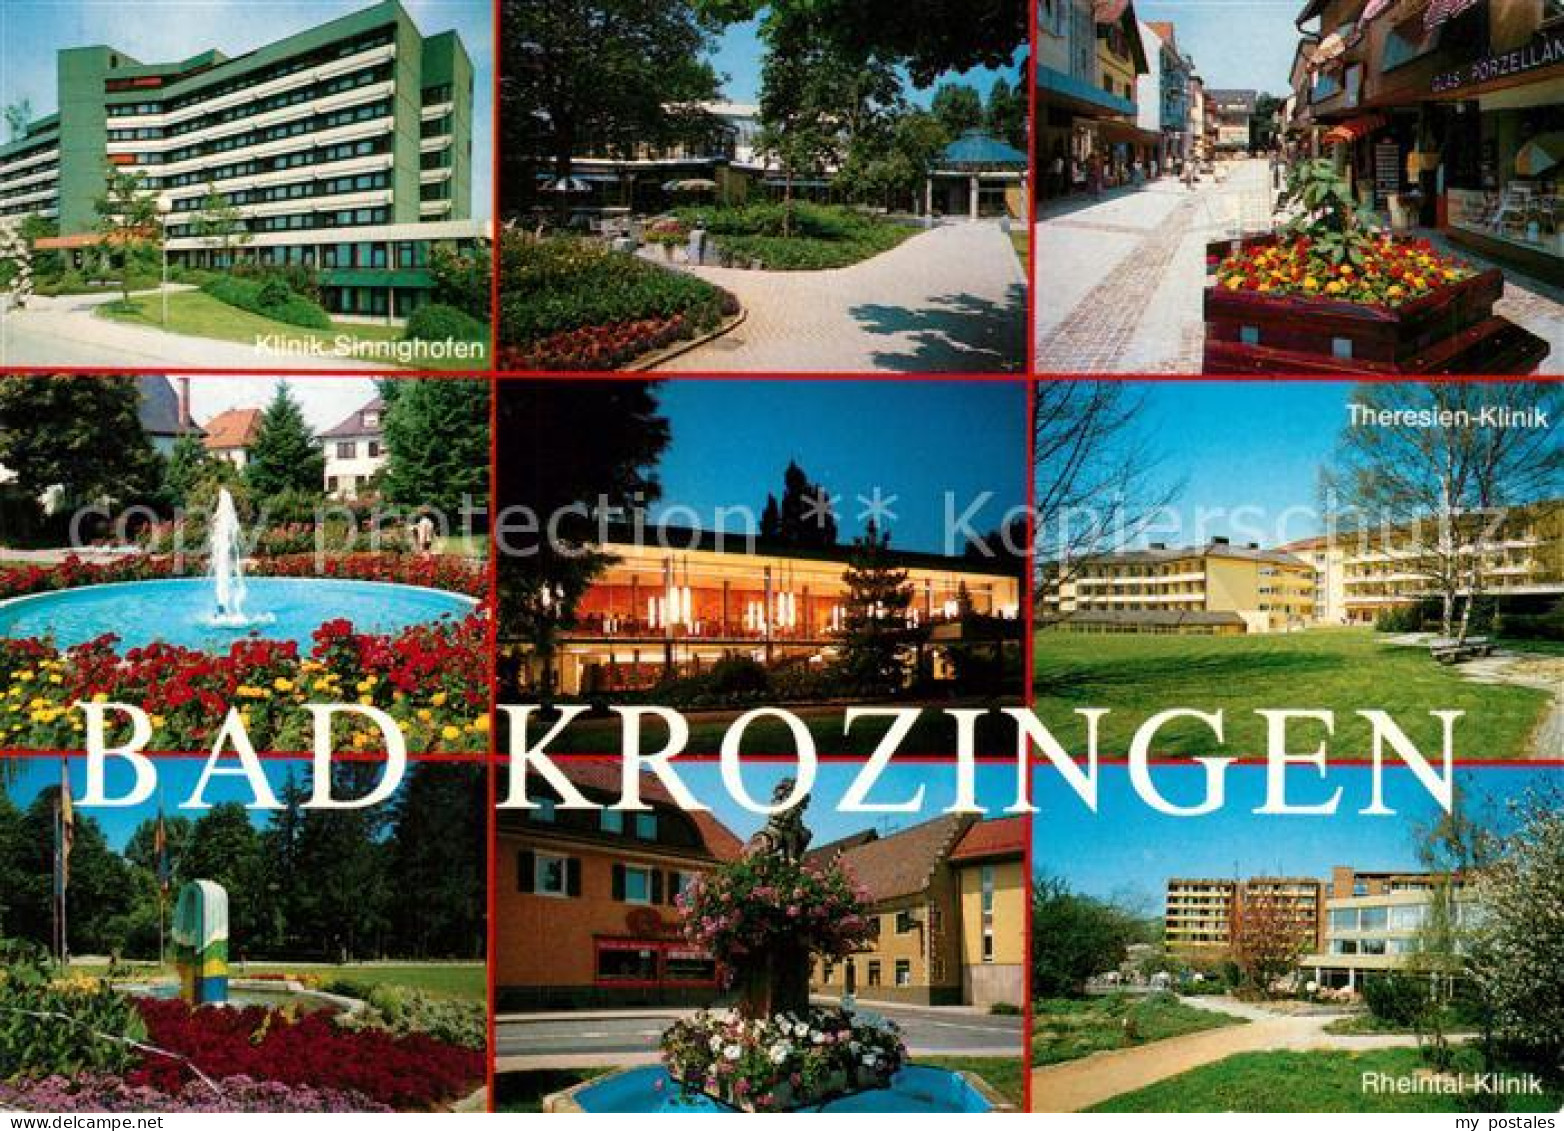 73176247 Bad Krozingen Theresien-Klinik Rheintal-Klinik Klinik-Sinnighofen  Bad  - Bad Krozingen